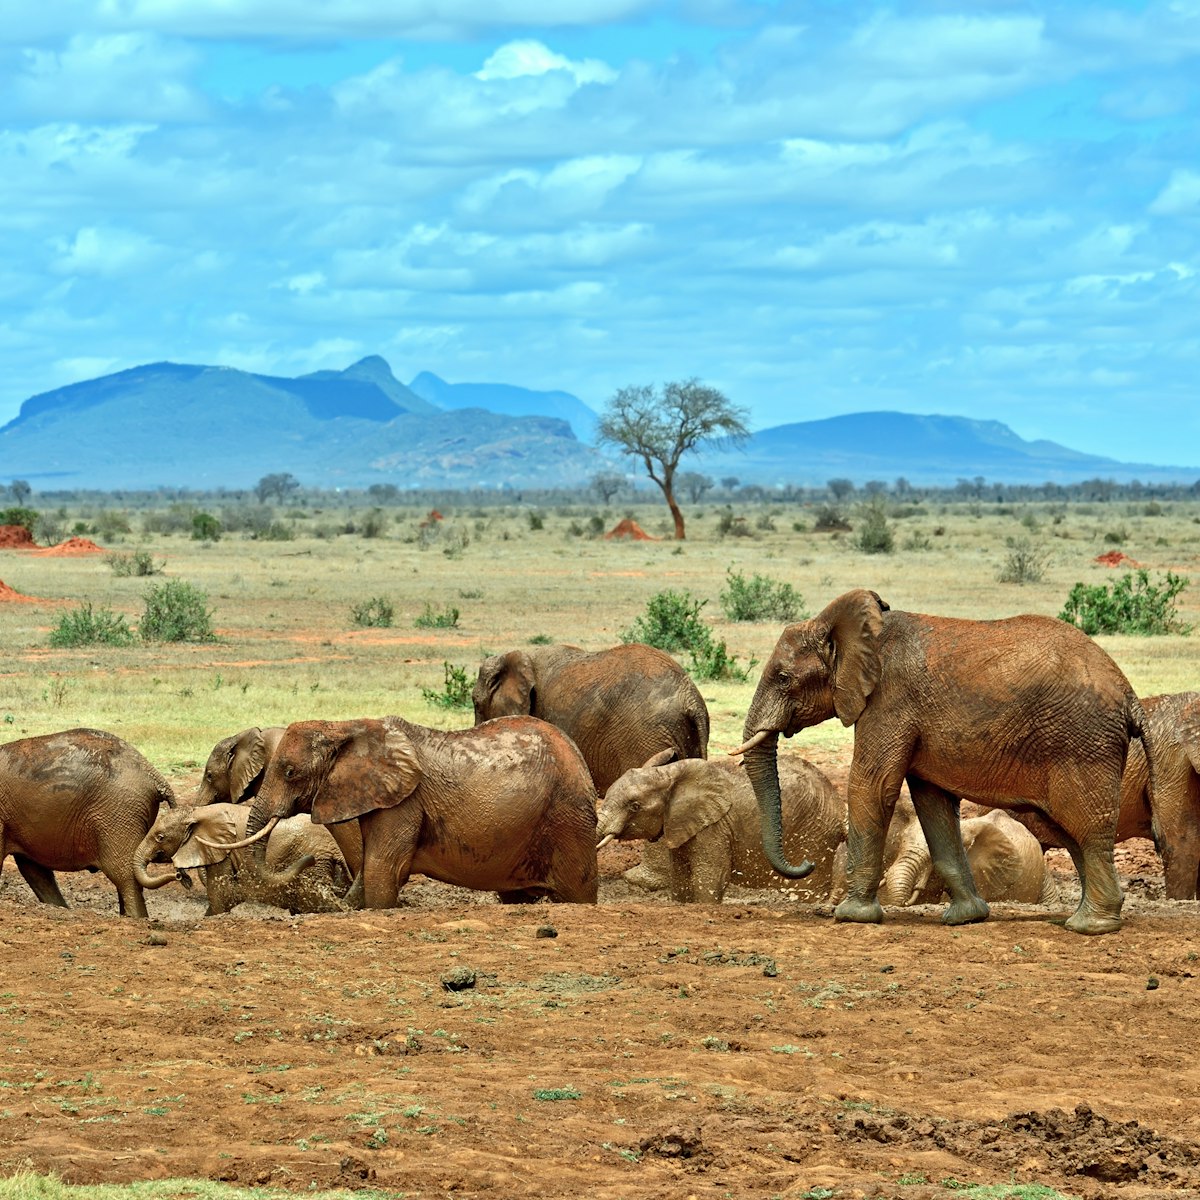 Elephants in Tsavo East National Park in Kenya.